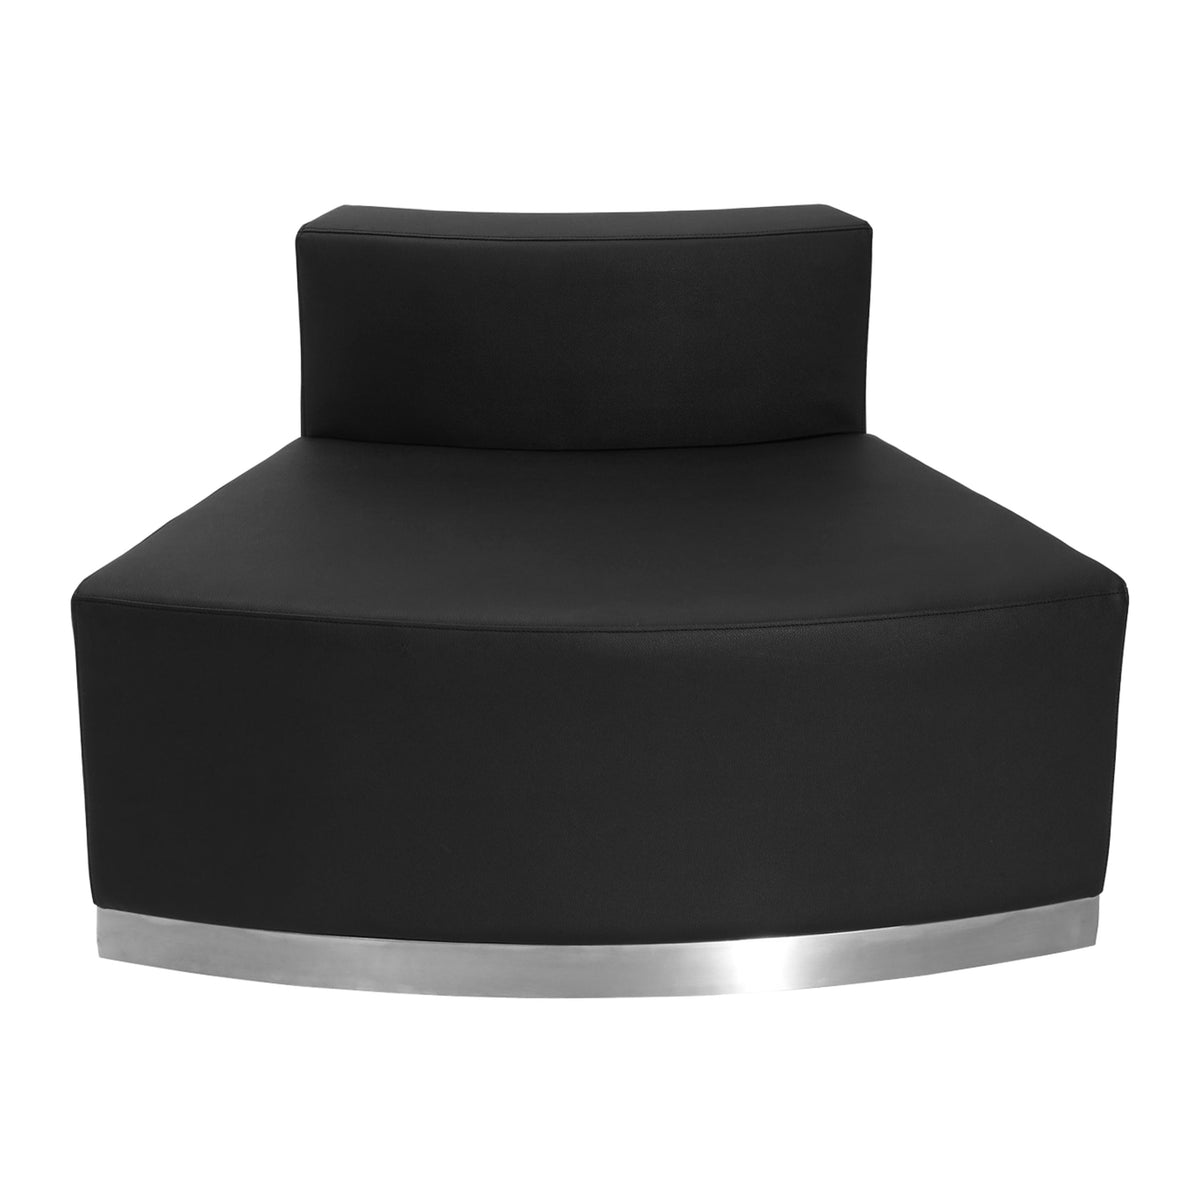 Black |#| 7 PC Black LeatherSoft Modular Reception Configuration w/Taut Back &Seat